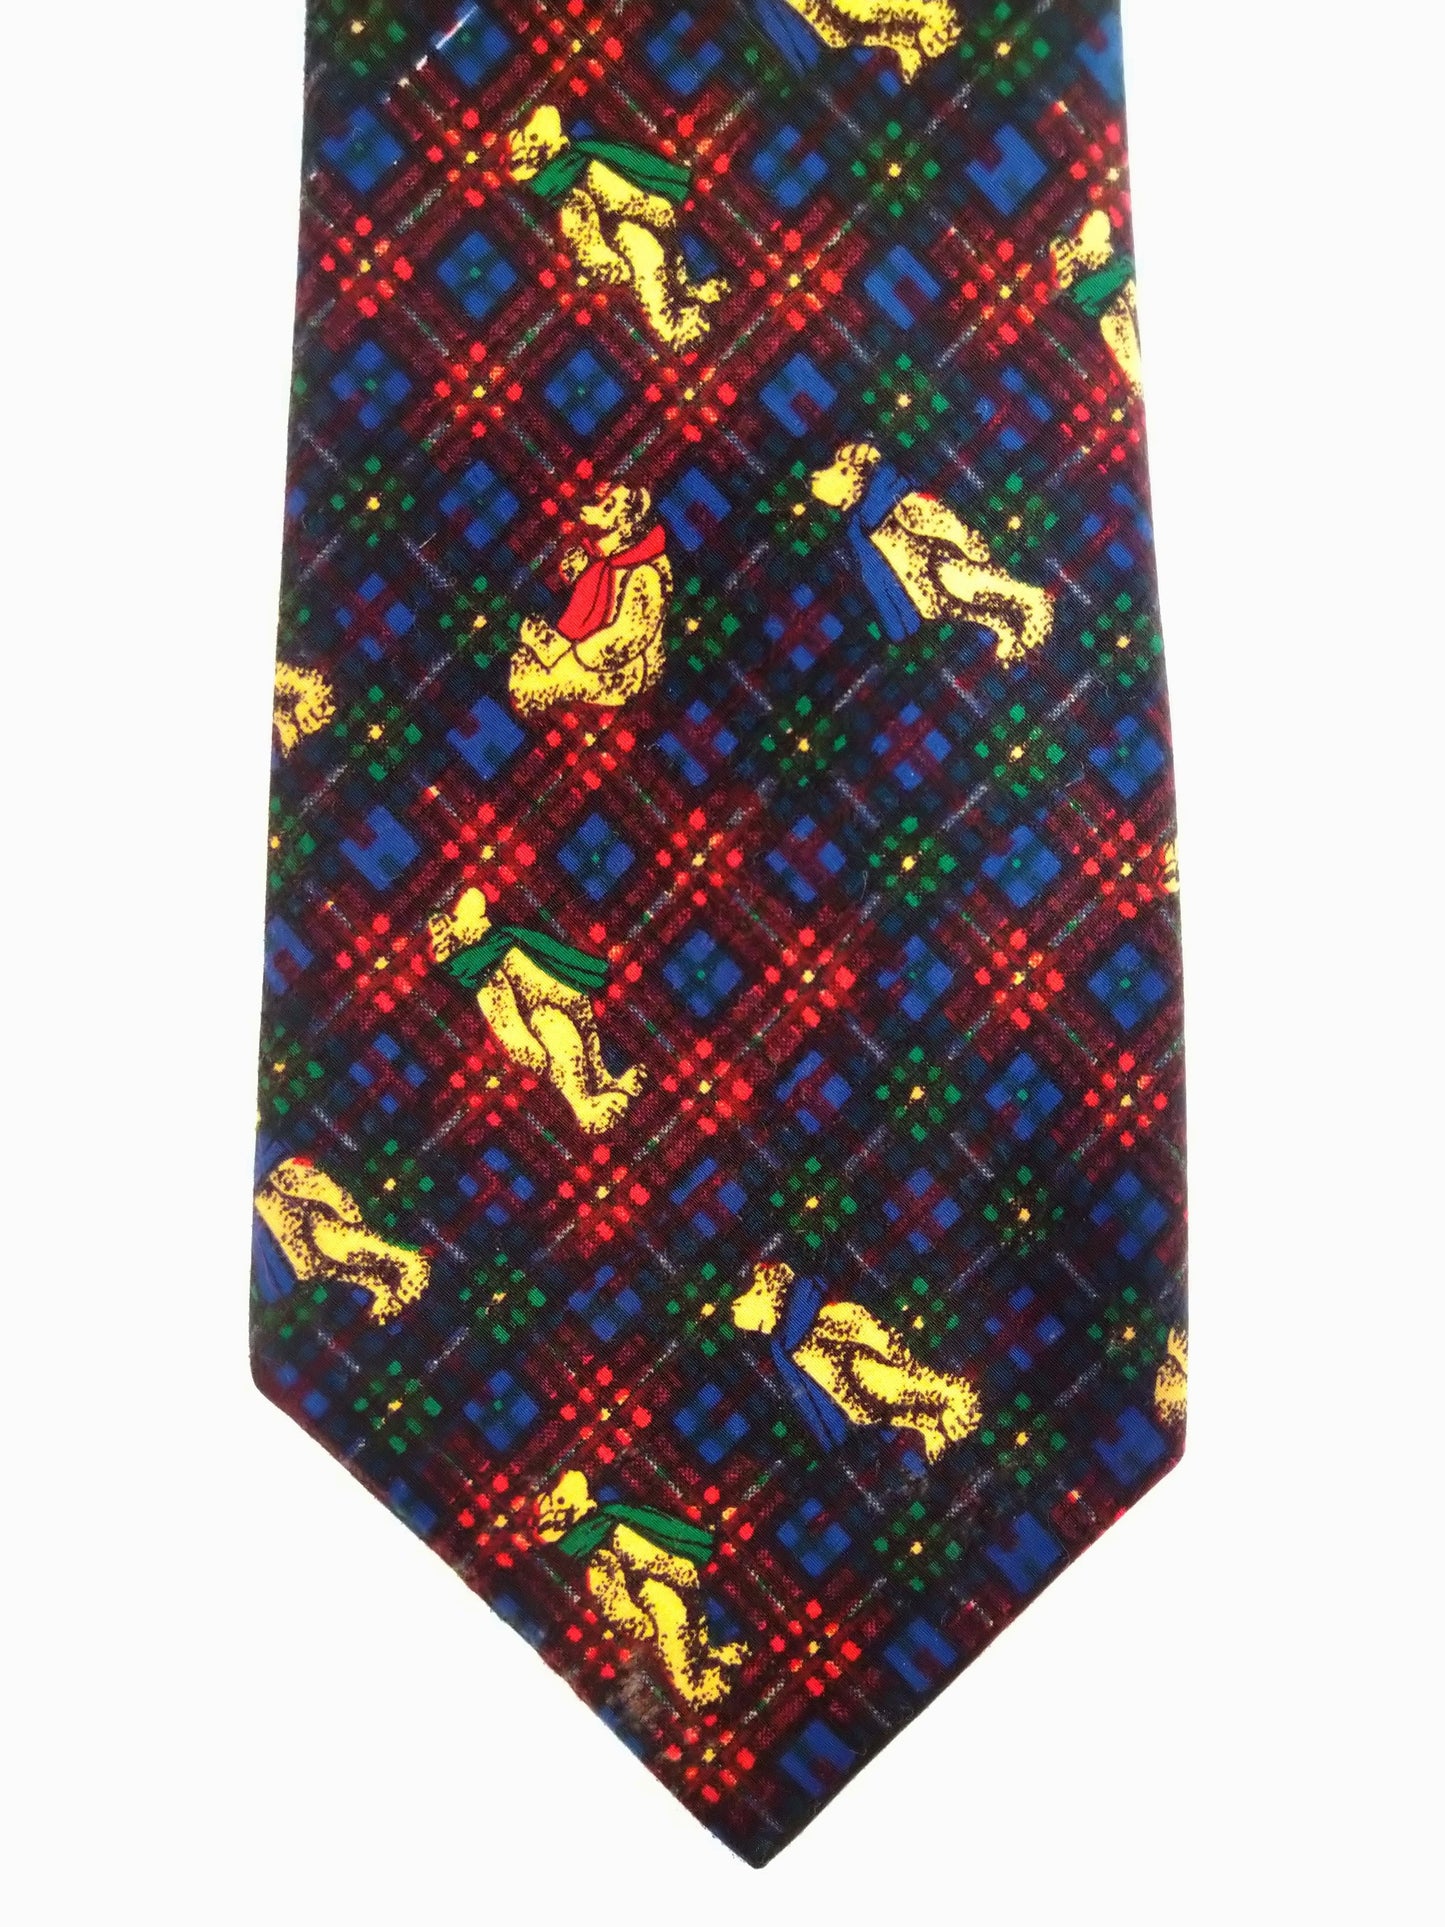 Vintage polyester tie. Beautiful multicolored bear motif.